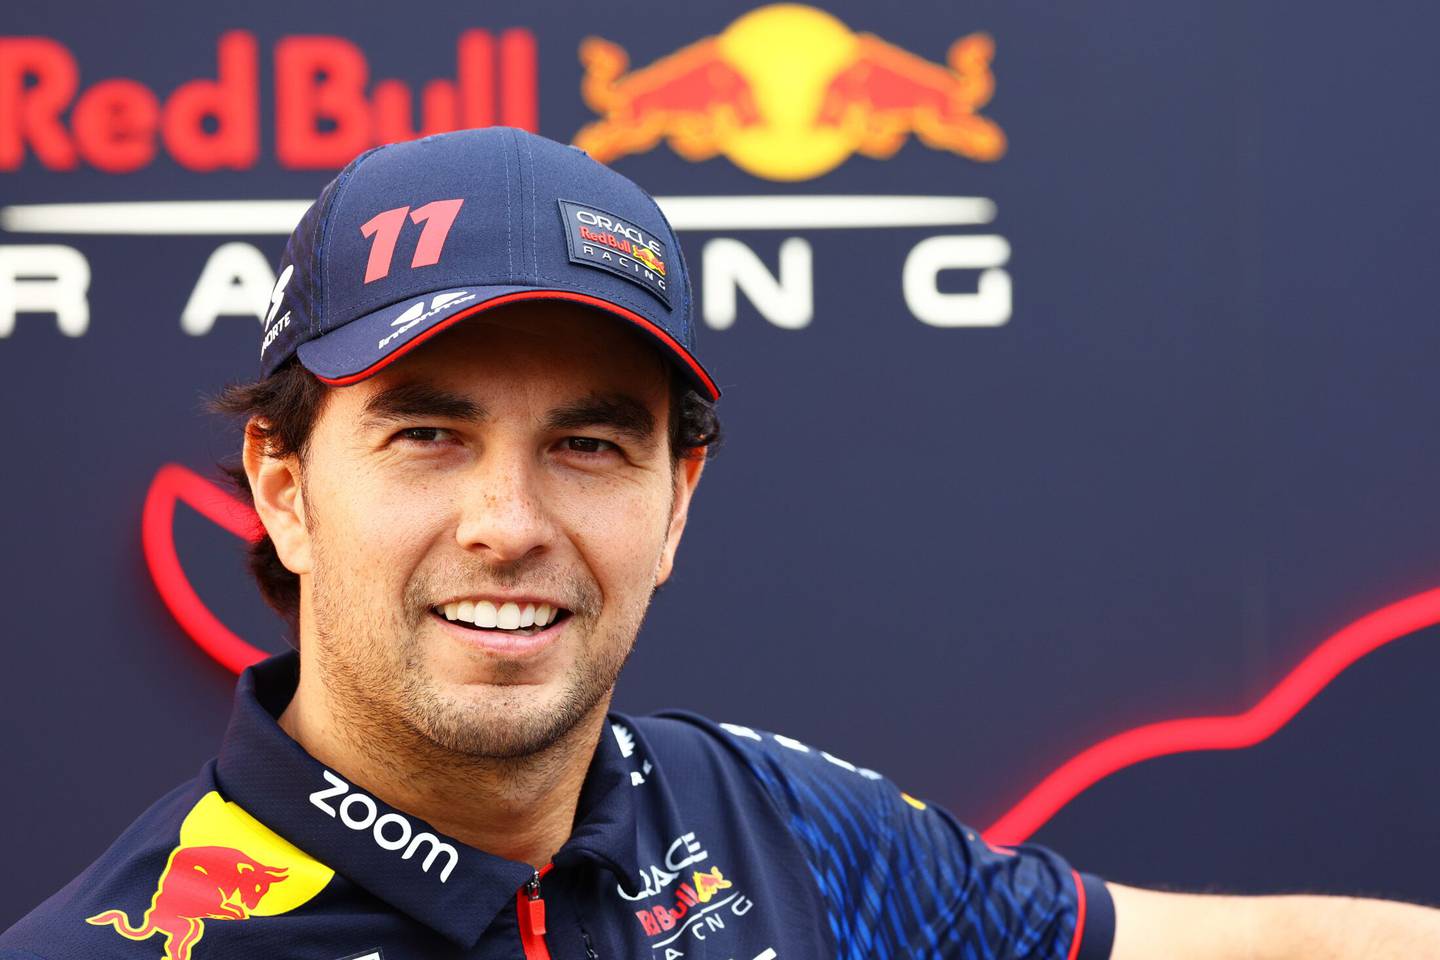 Sergio Pérez de Red Bull Racing. Fotógrafo: Mark Thompson/Getty Images Europadfd